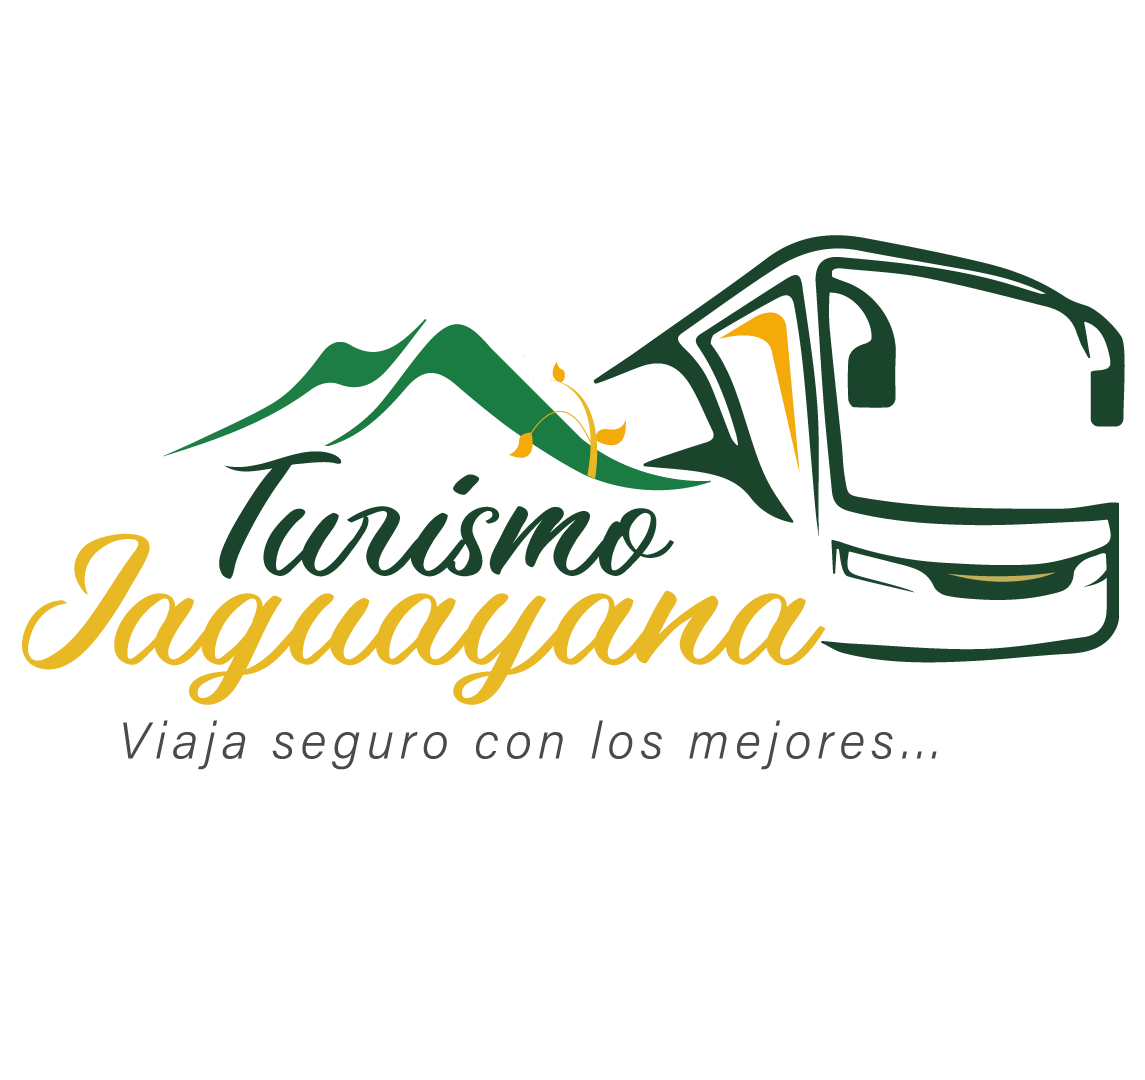 jaguayana - Servicio de transporte turístico